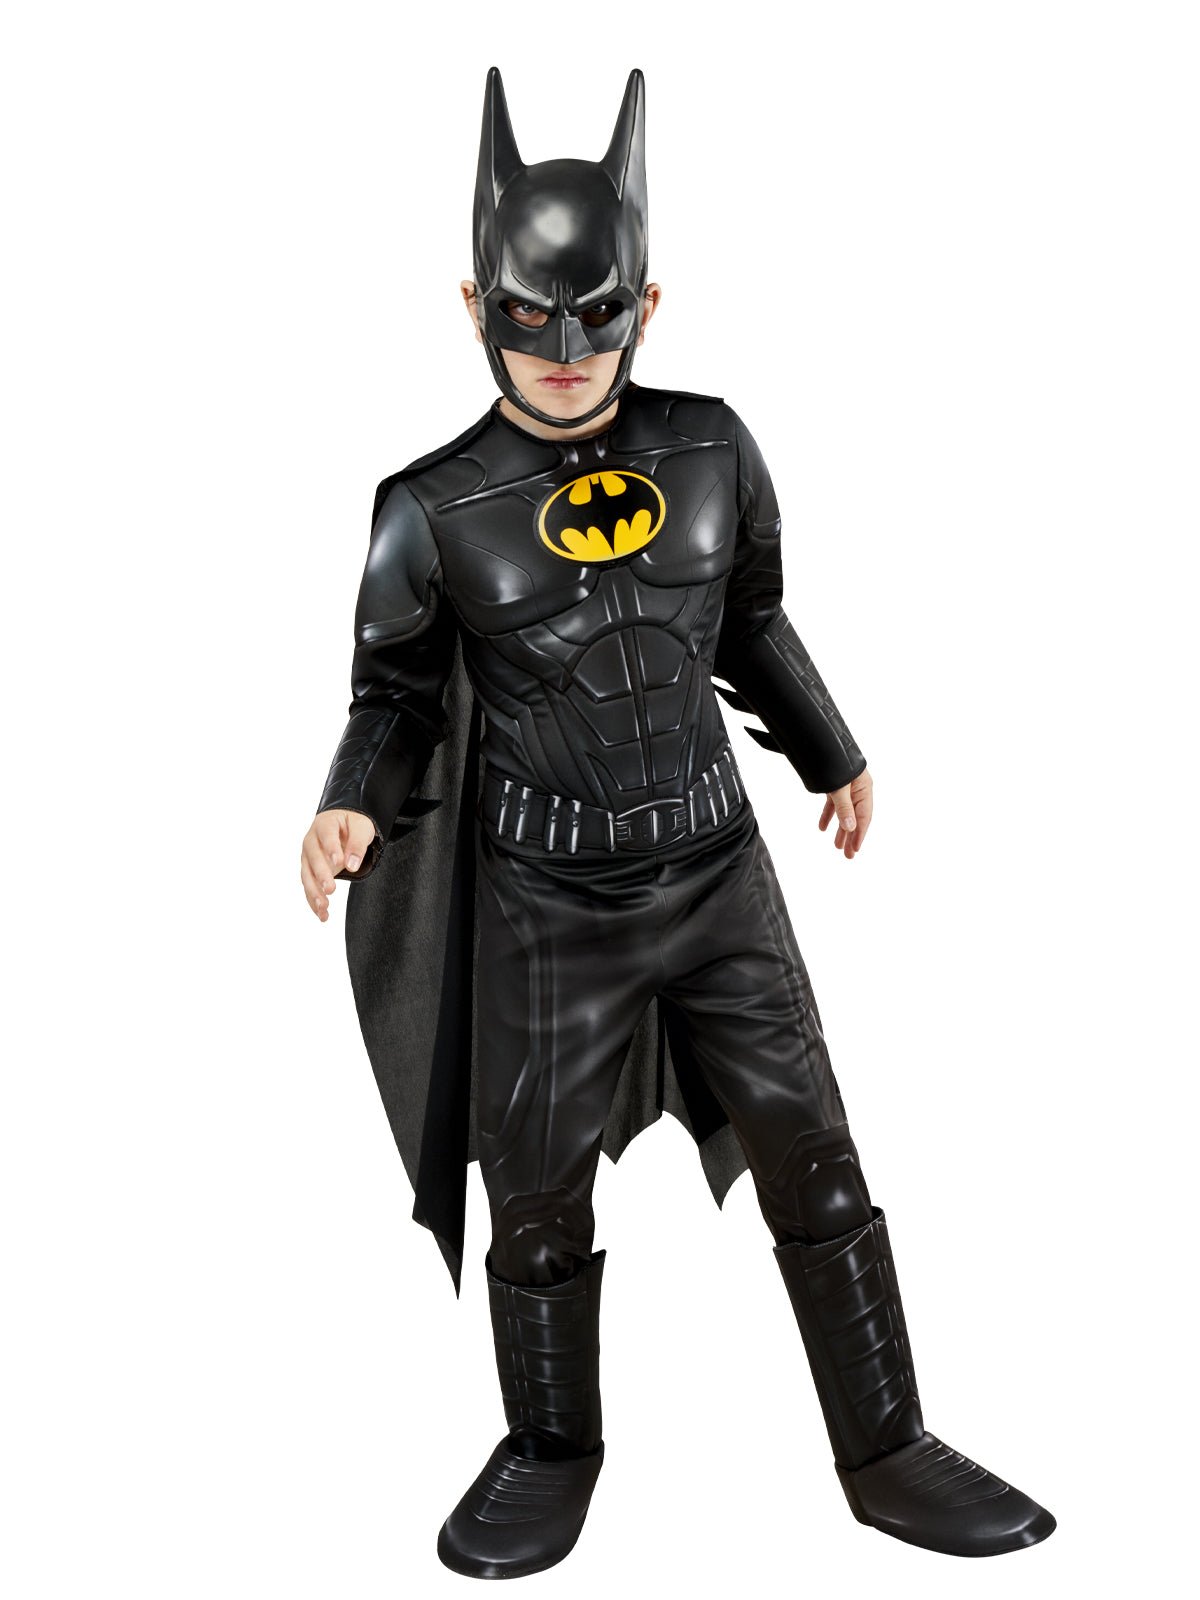 Shop the Look: Batman Keaton Costume for Kids